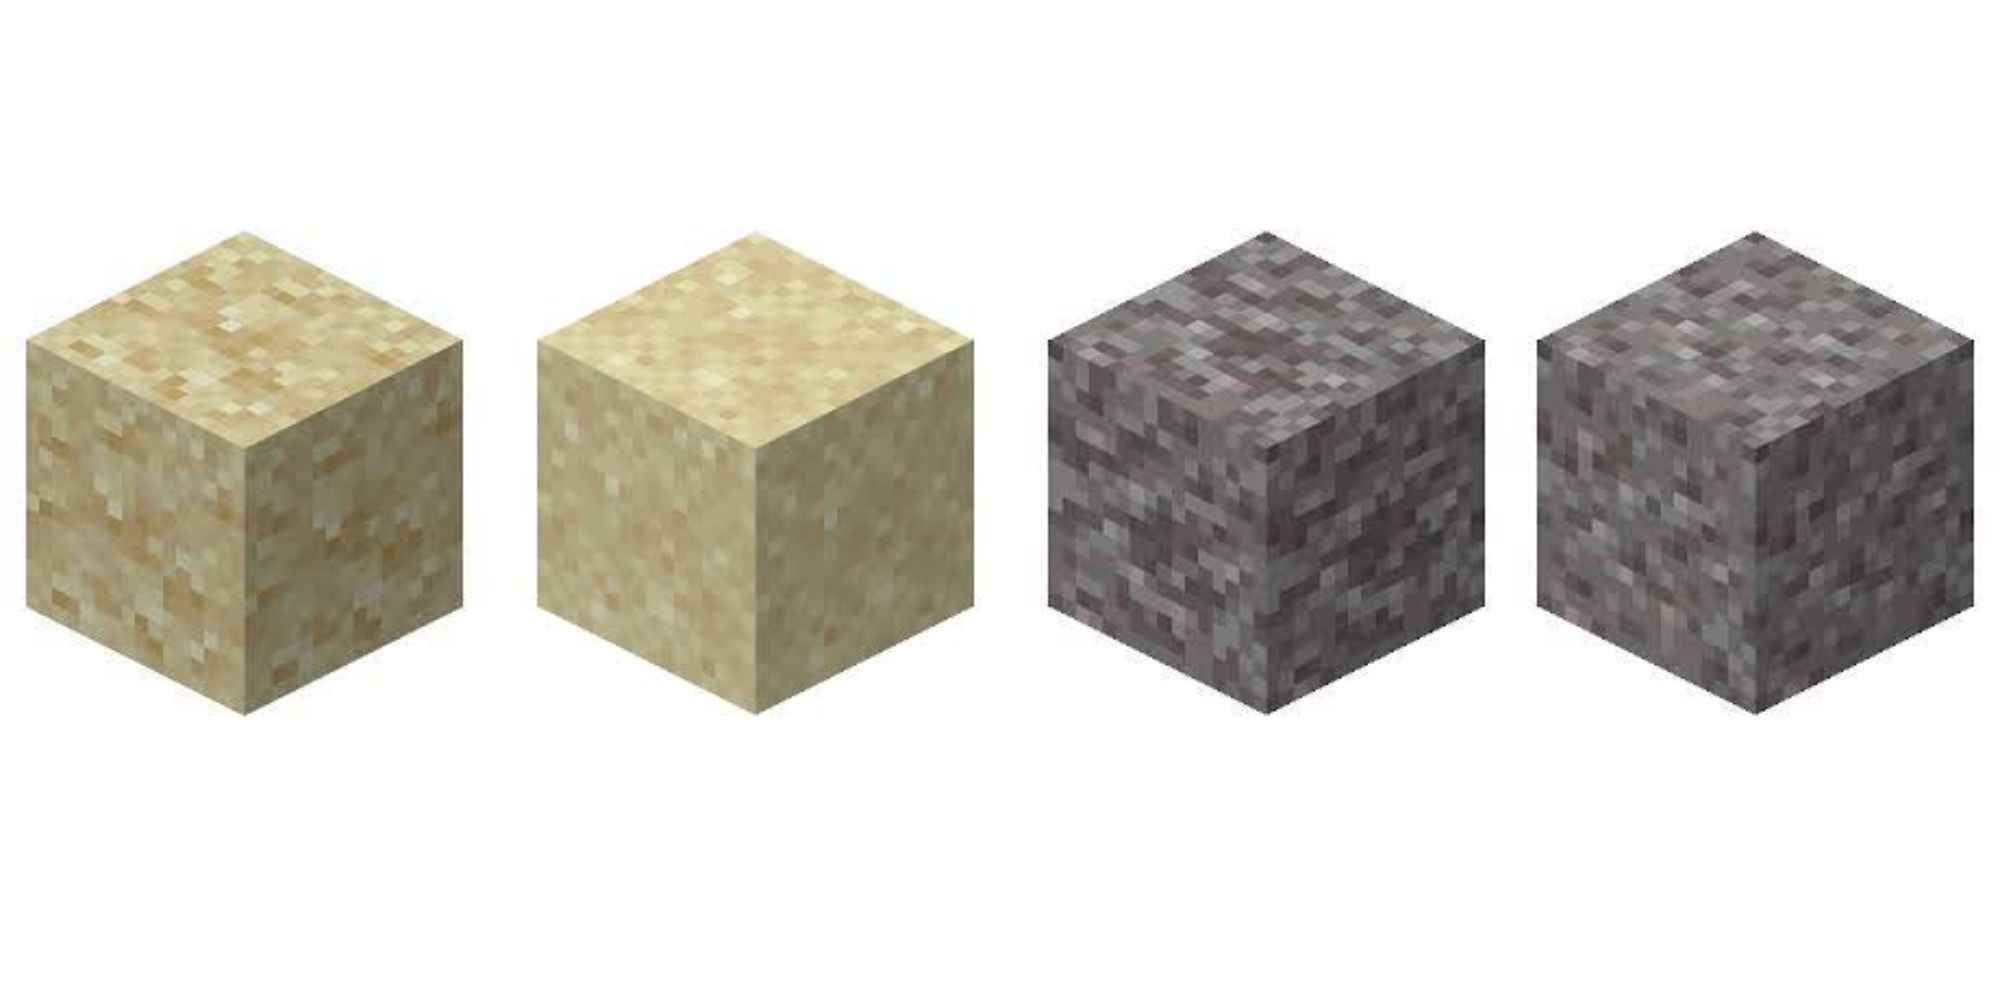 Minecraft Suspicious Blocks, sand and gravel blocks with their suspicious counterparts